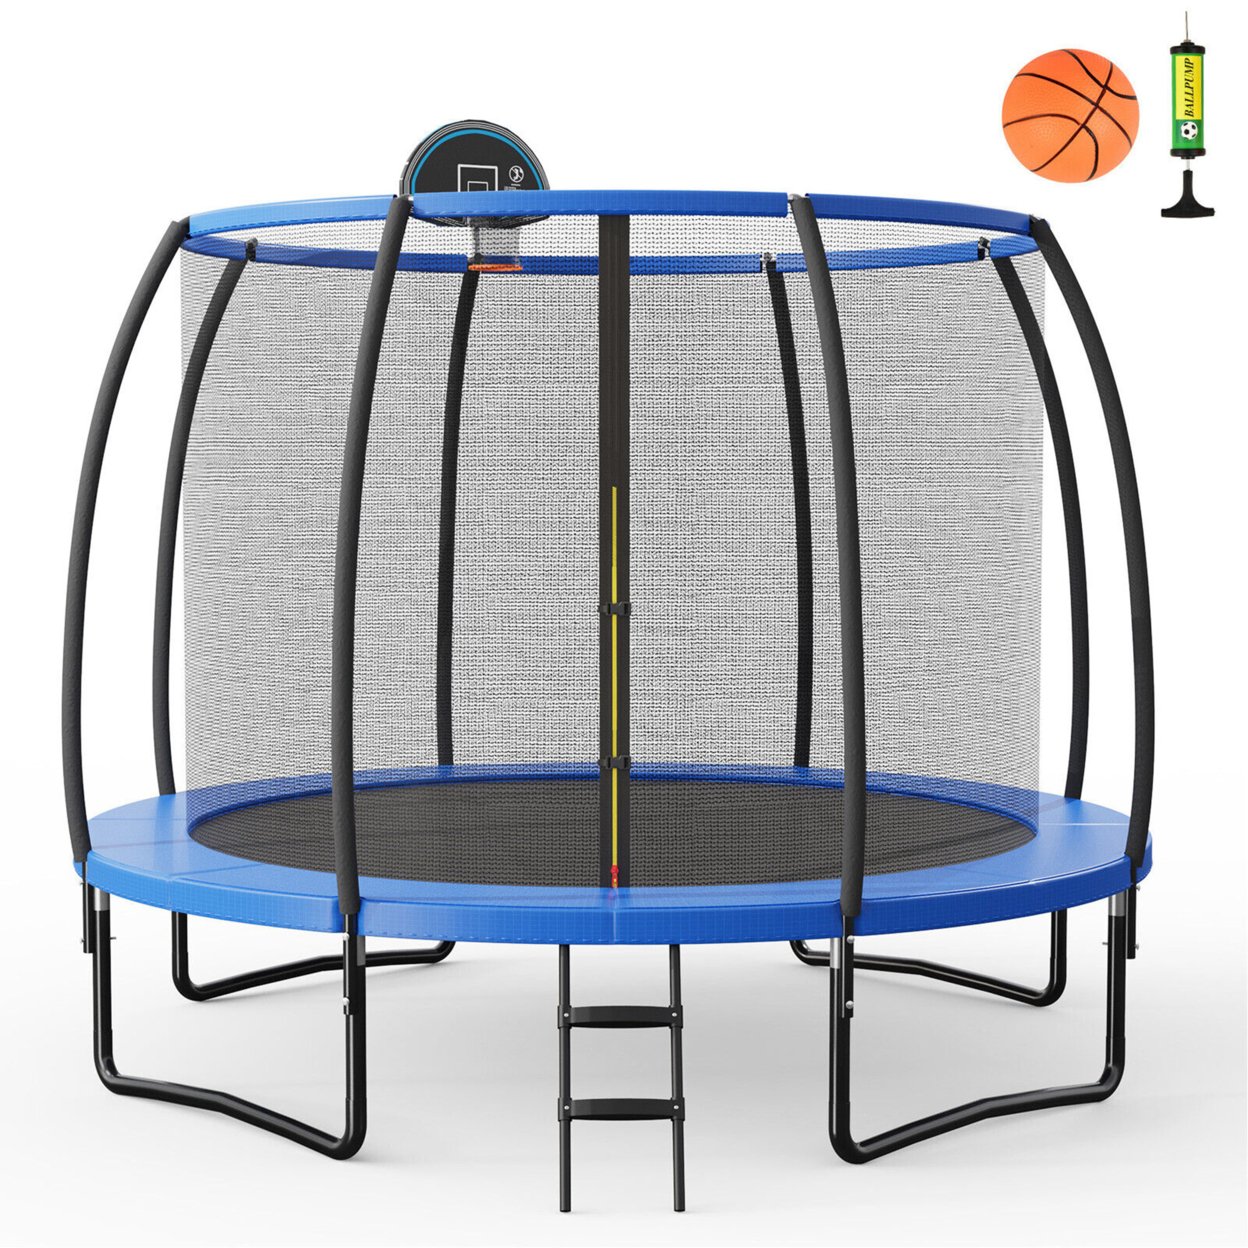 12FT Recreational Trampoline W/ Basketball Hoop Safety Enclosure Net Ladder